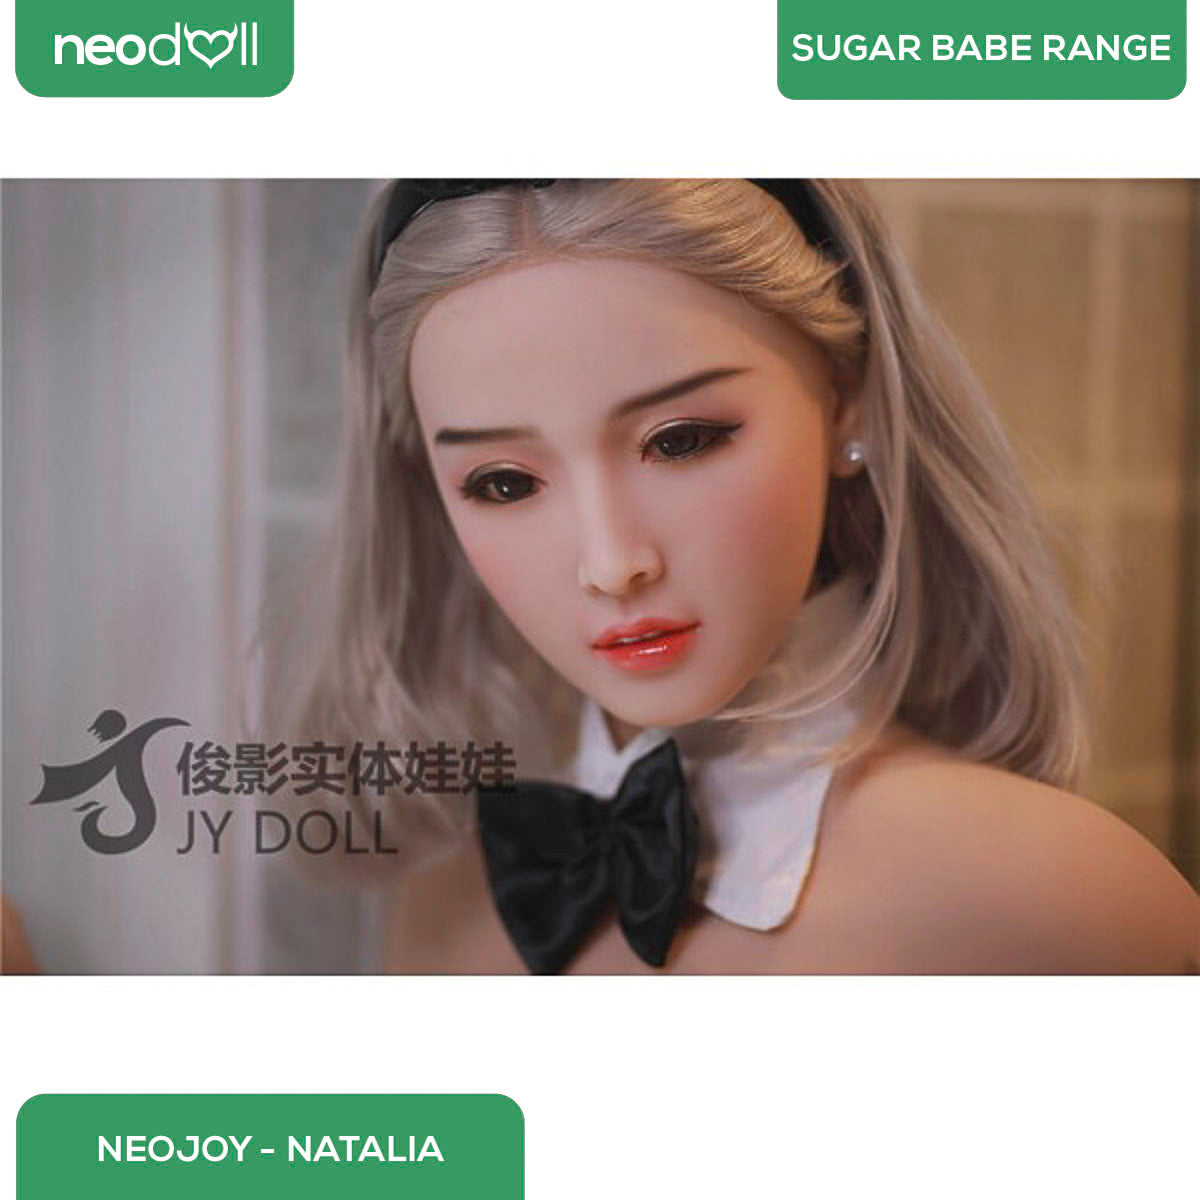 Neodoll Sugar Babe - Natalia - Realistic Sex Doll - Gel Breast - Uterus -159cm- Natural